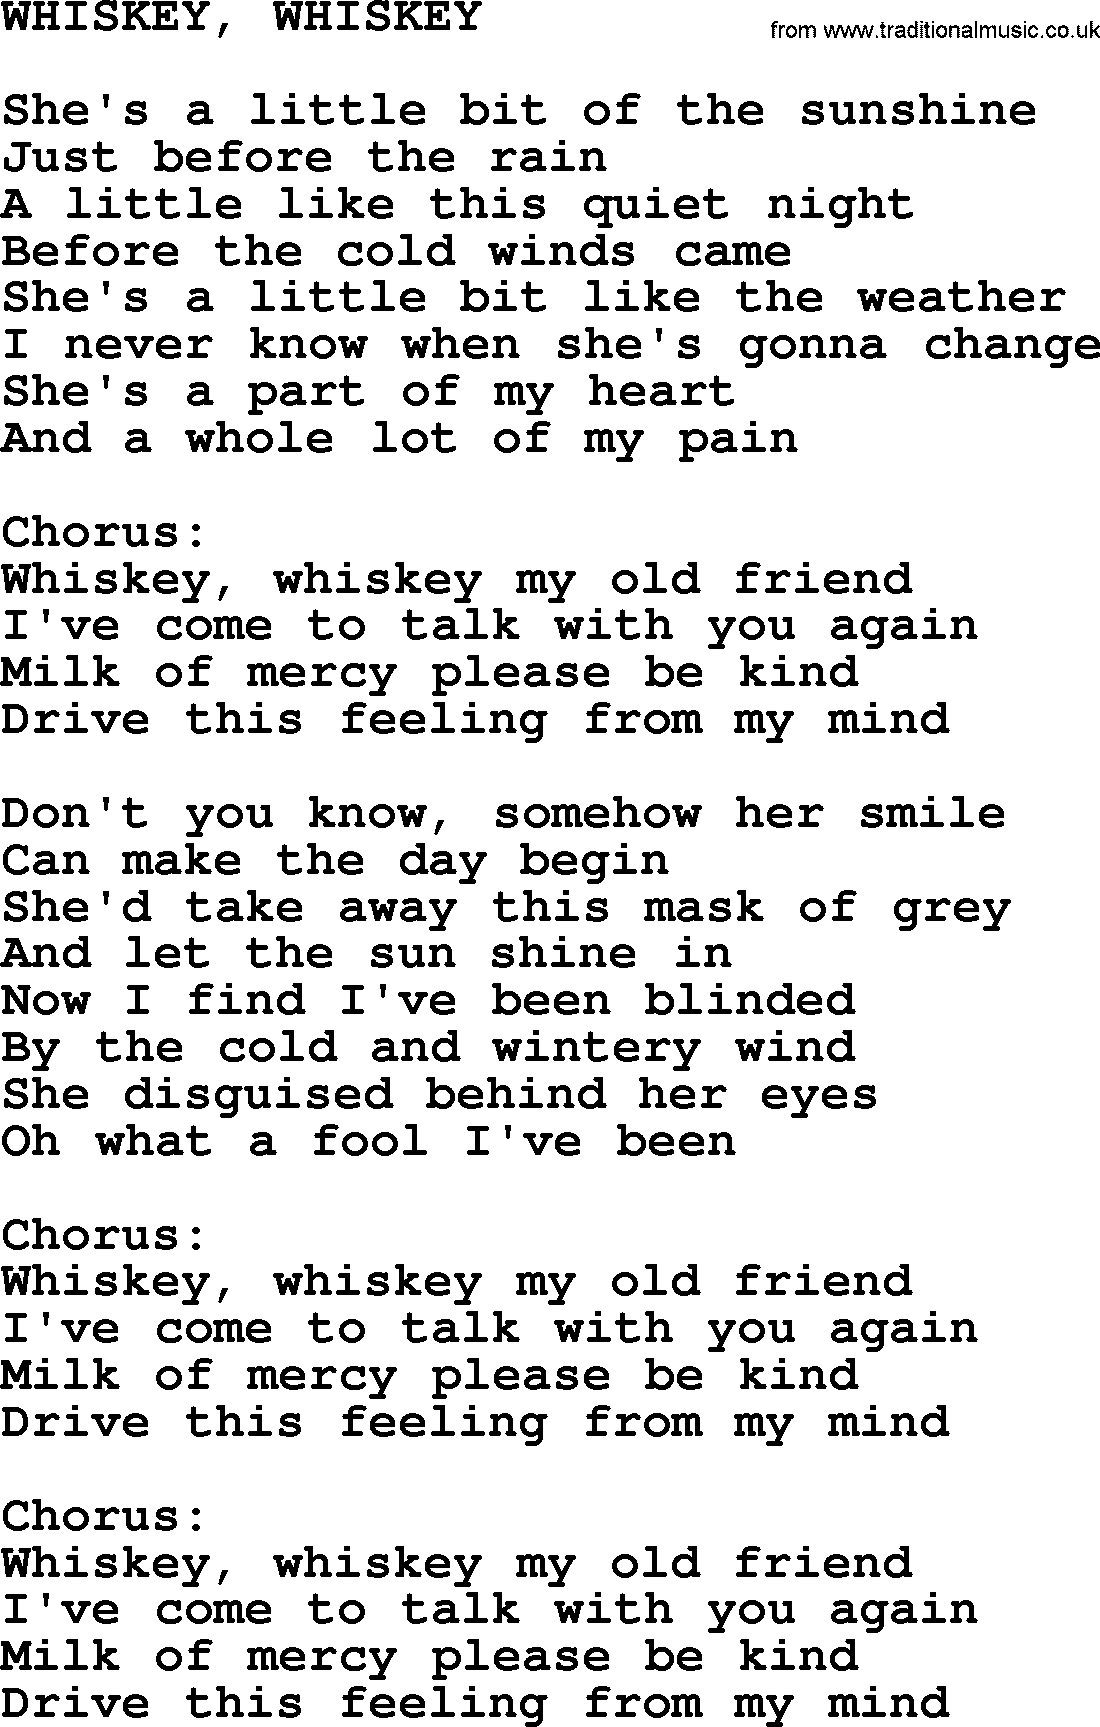 Kris Kristofferson song: Whiskey, Whiskey lyrics